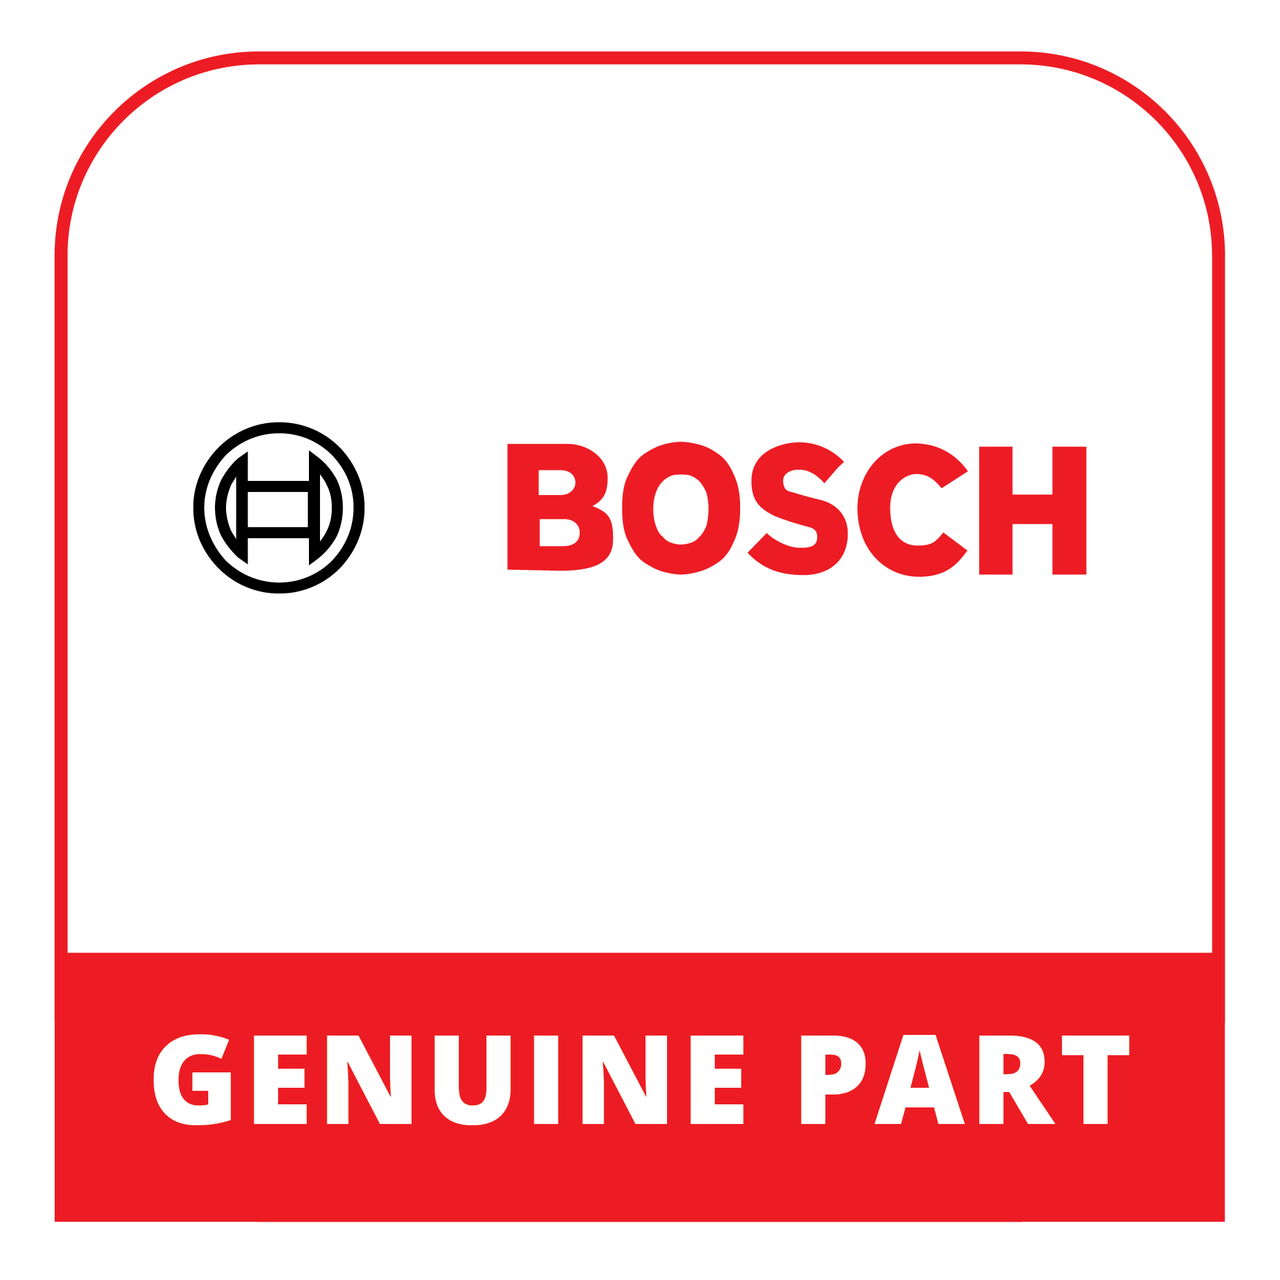 Bosch (Thermador) 10009568 - Knob - Genuine Bosch (Thermador) Part